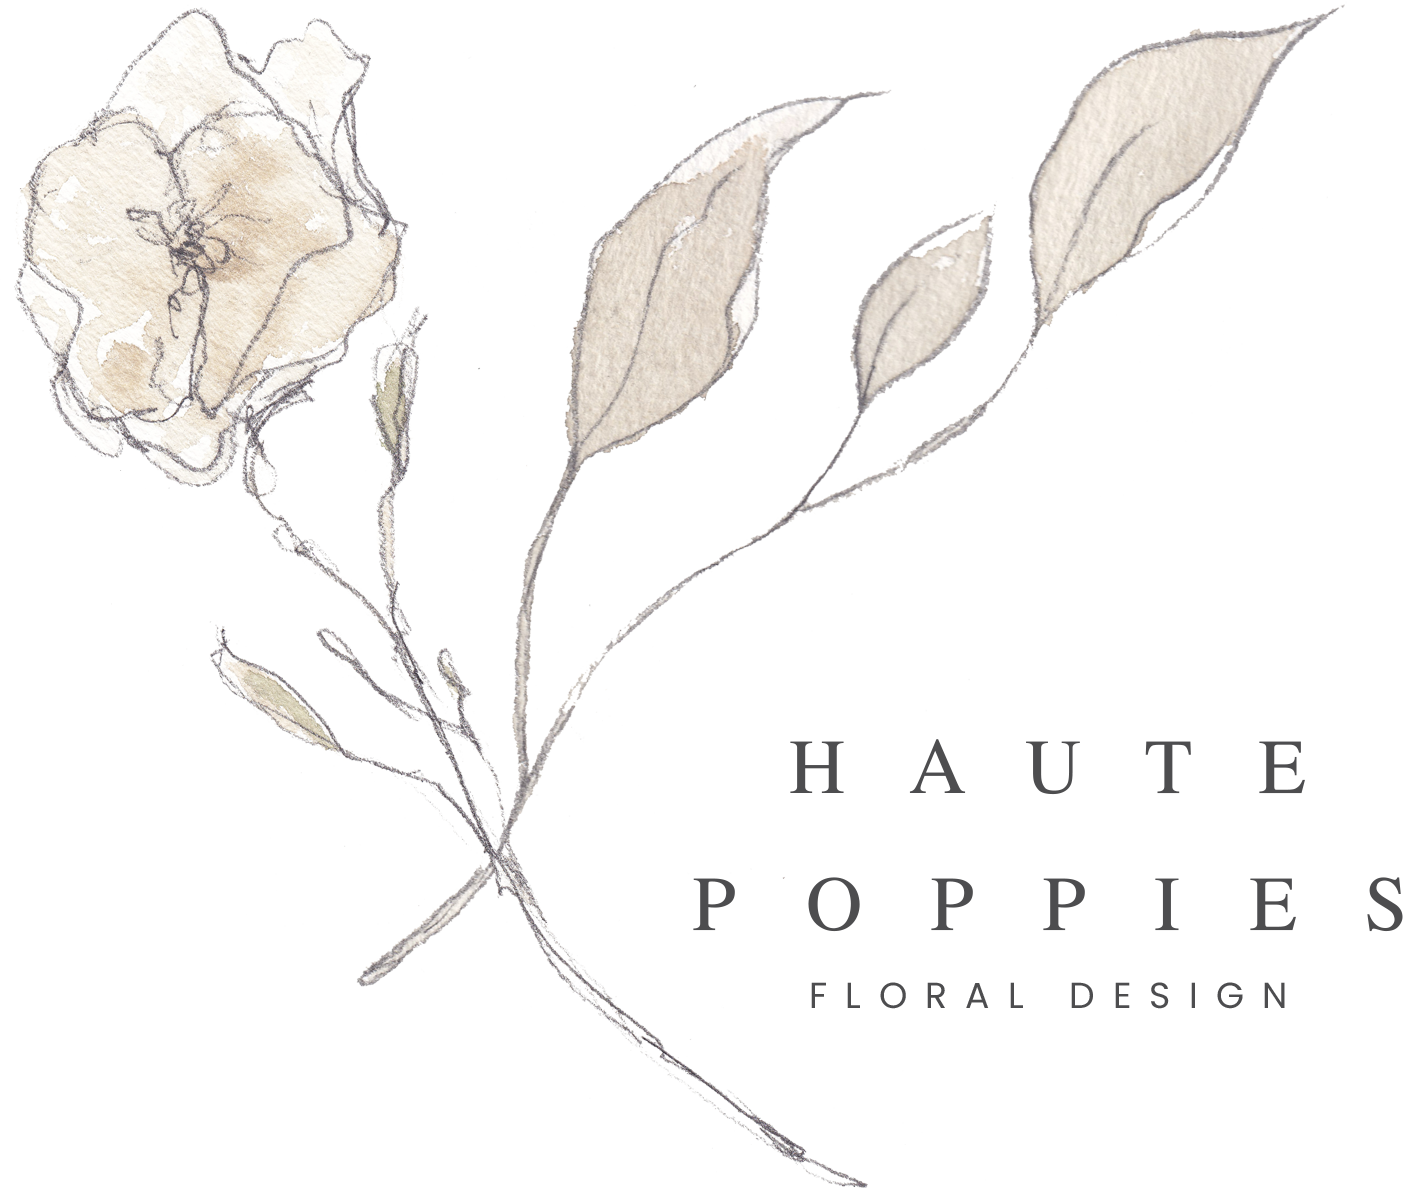 Haute Poppies Floral Design